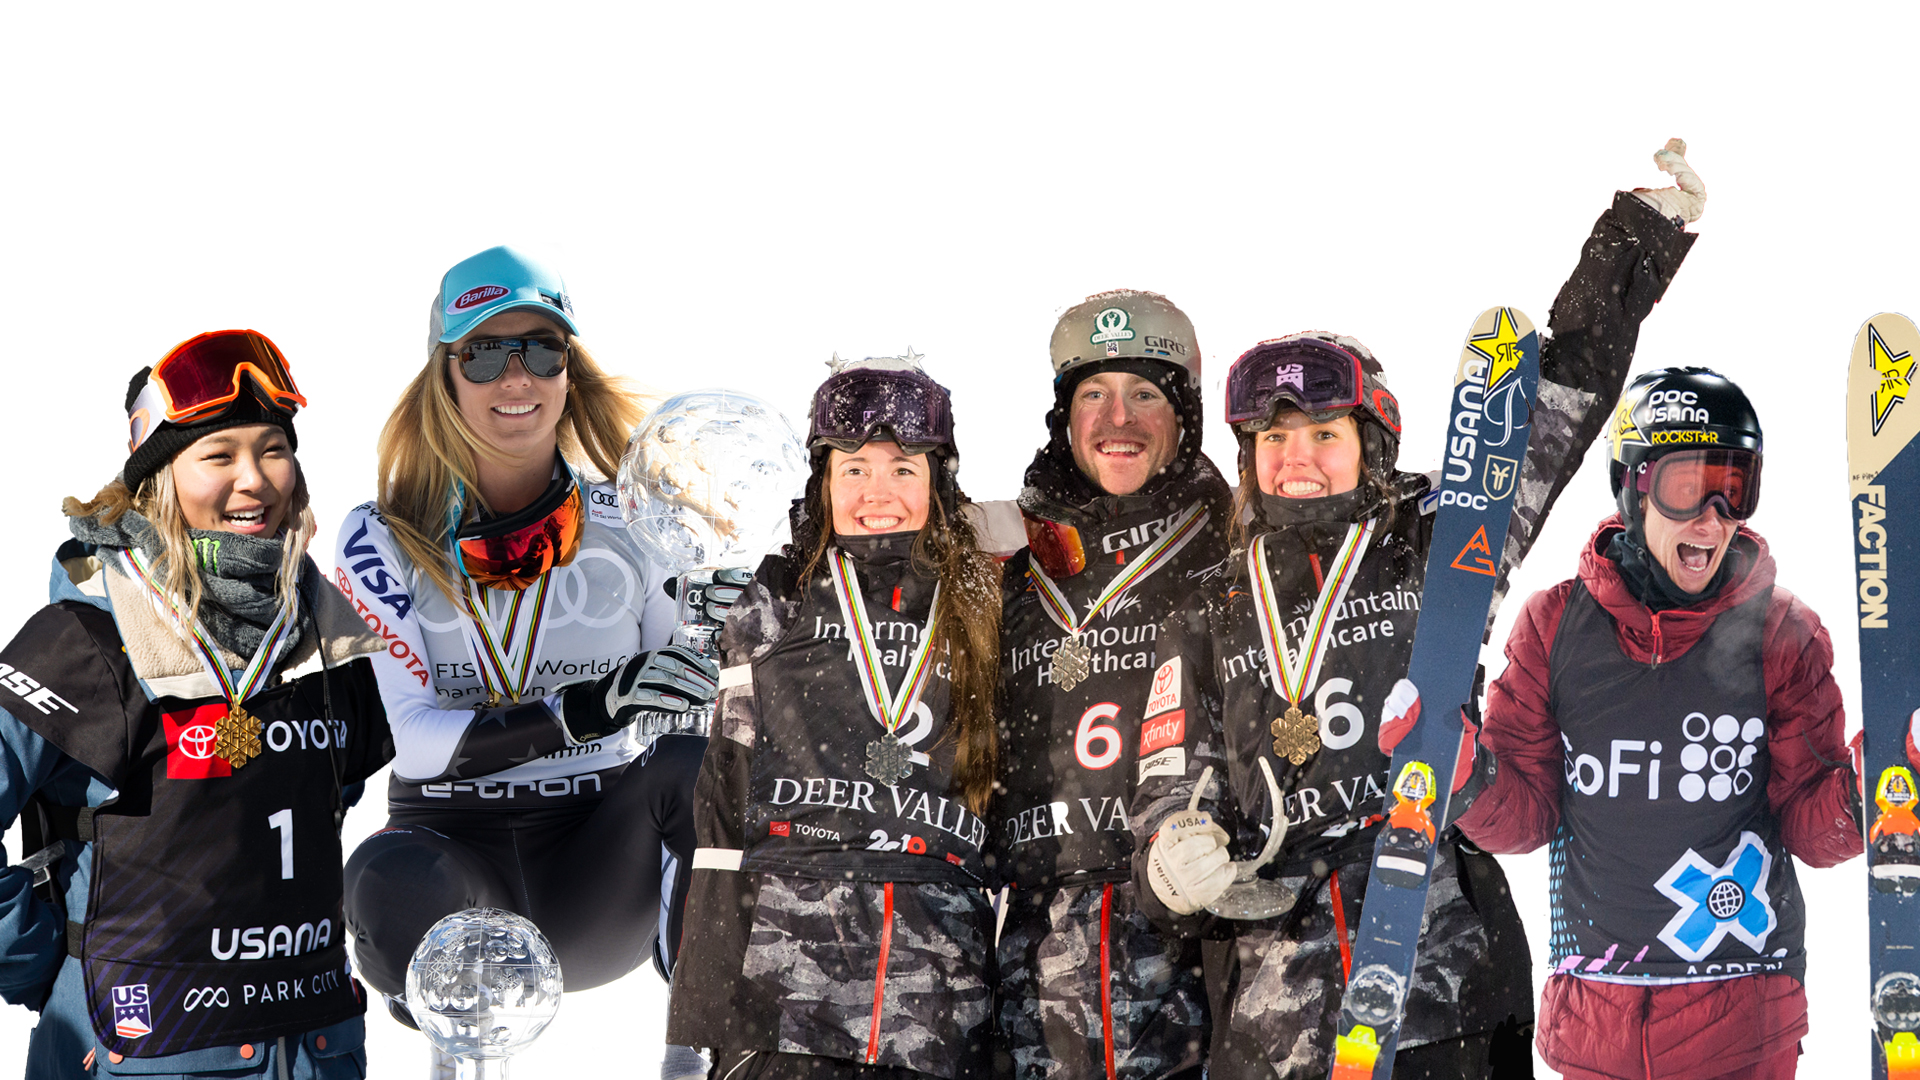 Peak Performance Women's Frost Ski Jacket – Racing Red - Free Style Sport